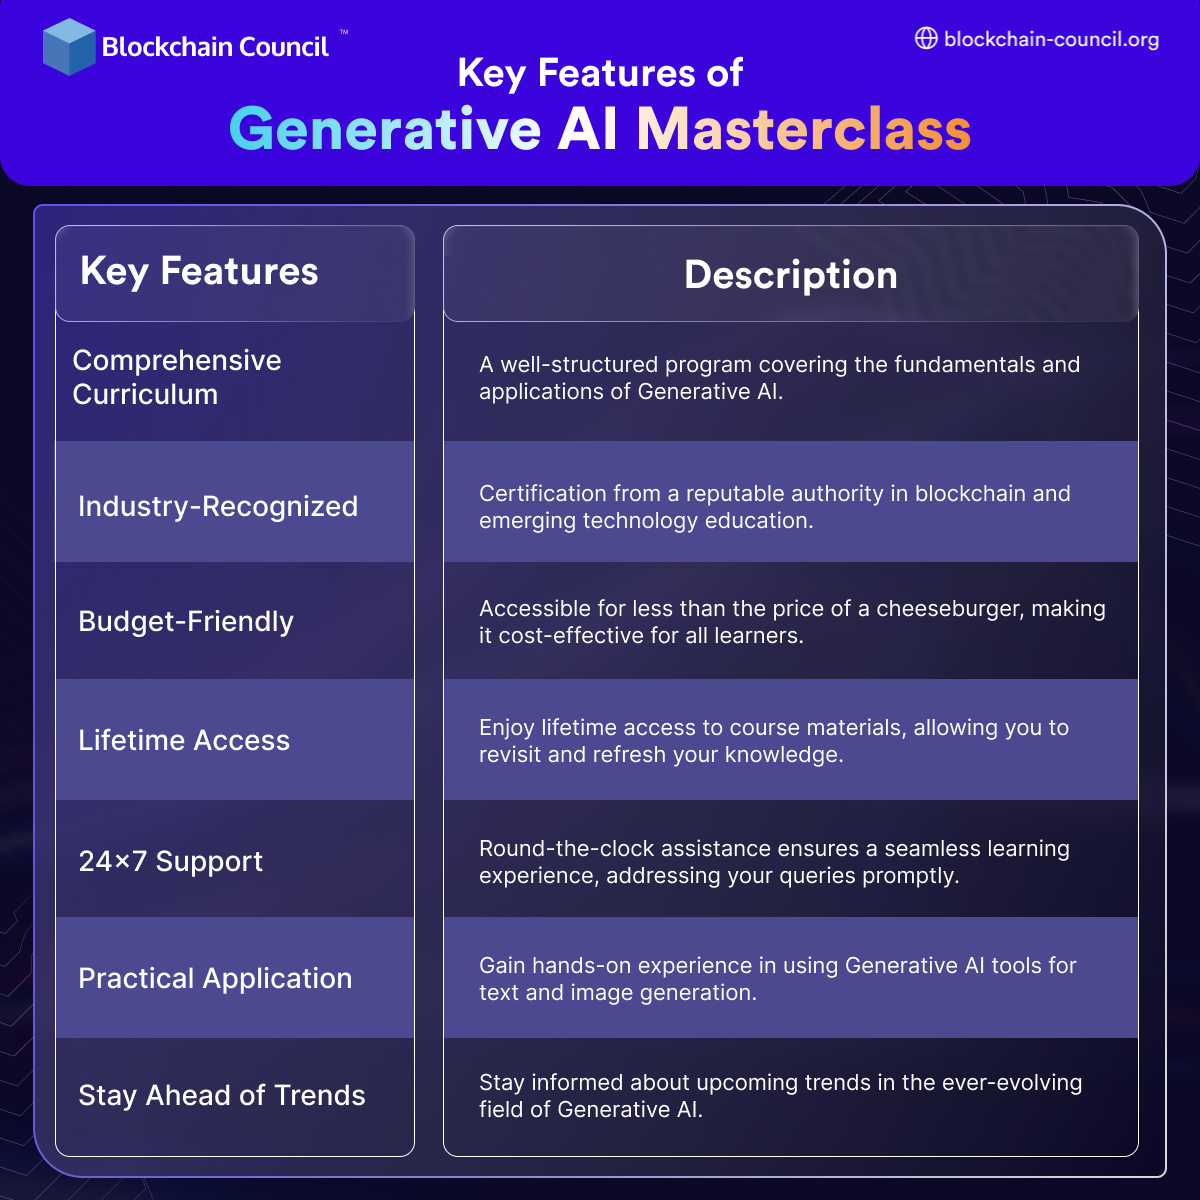 Key Features of Generative AI Masterclass